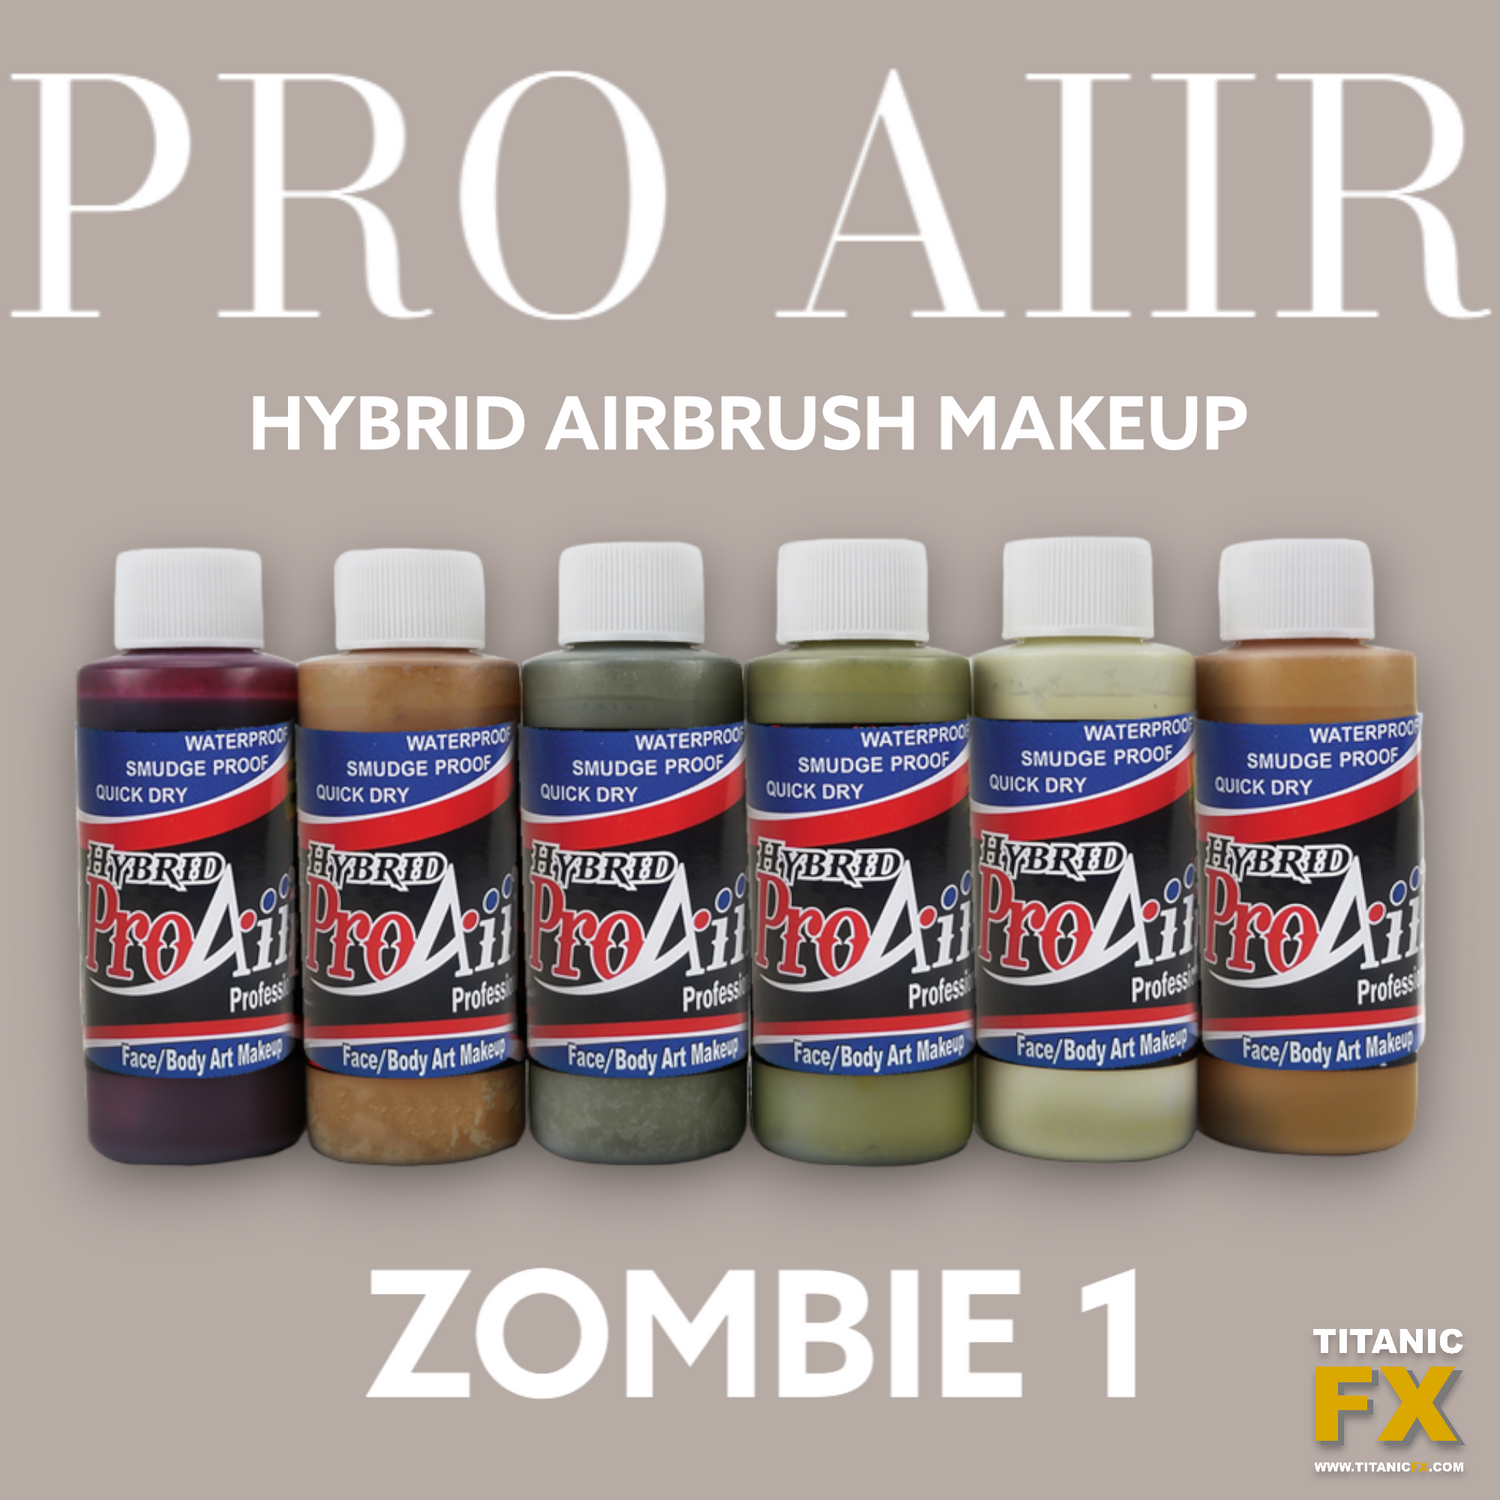 Pro Aiir Hybrid Airbrush Makeup Kit - 'Zombie 1'